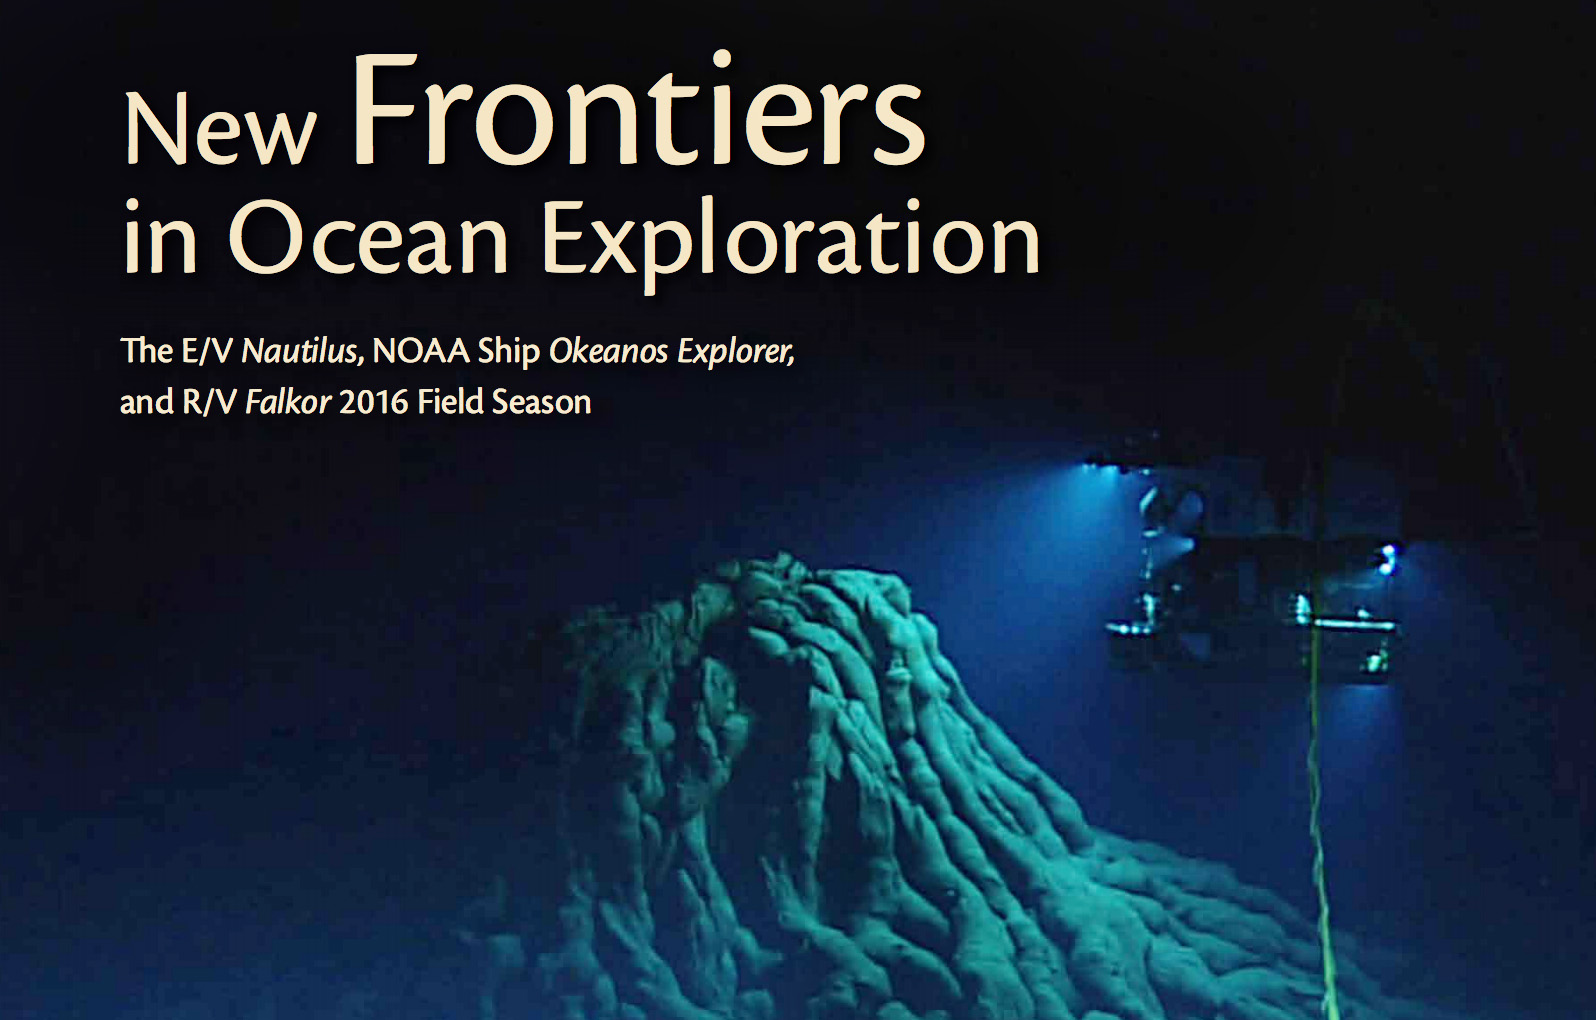 Ocean Education Resources - Schmidt Ocean Institute